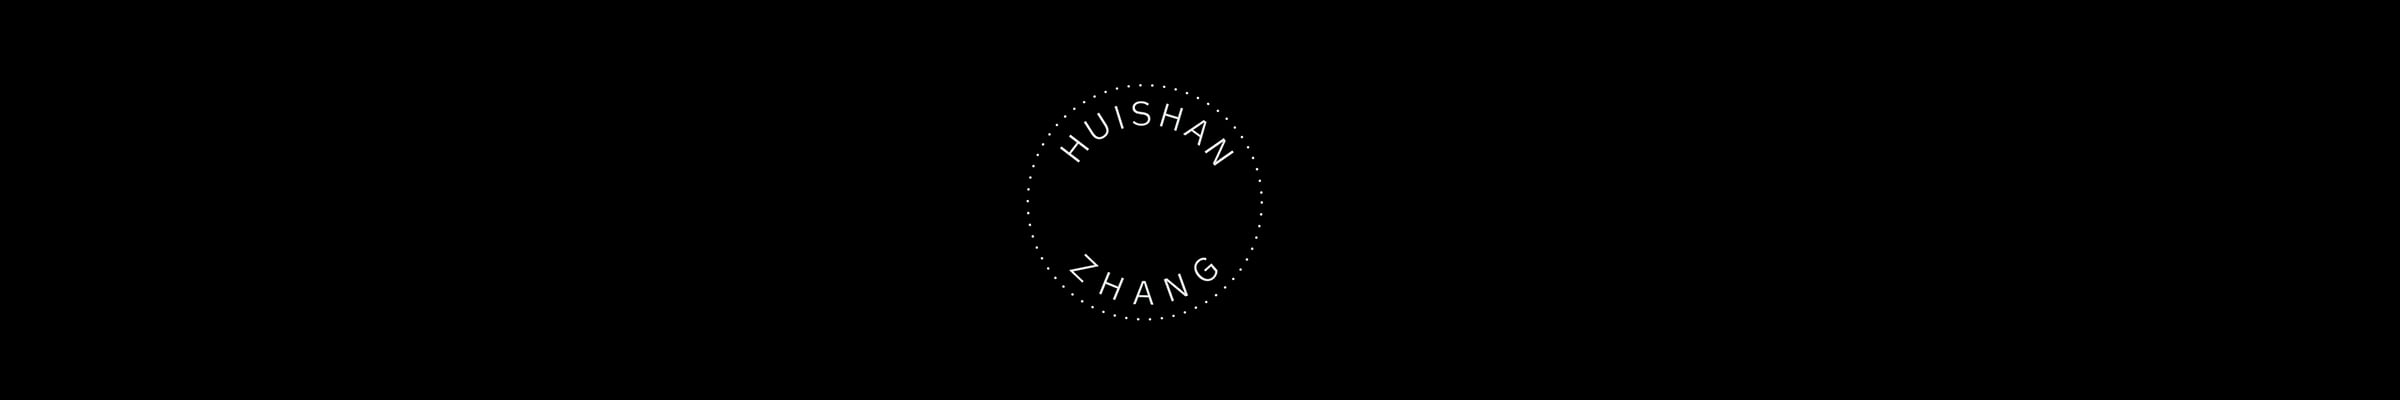 huishan-zhang-banner